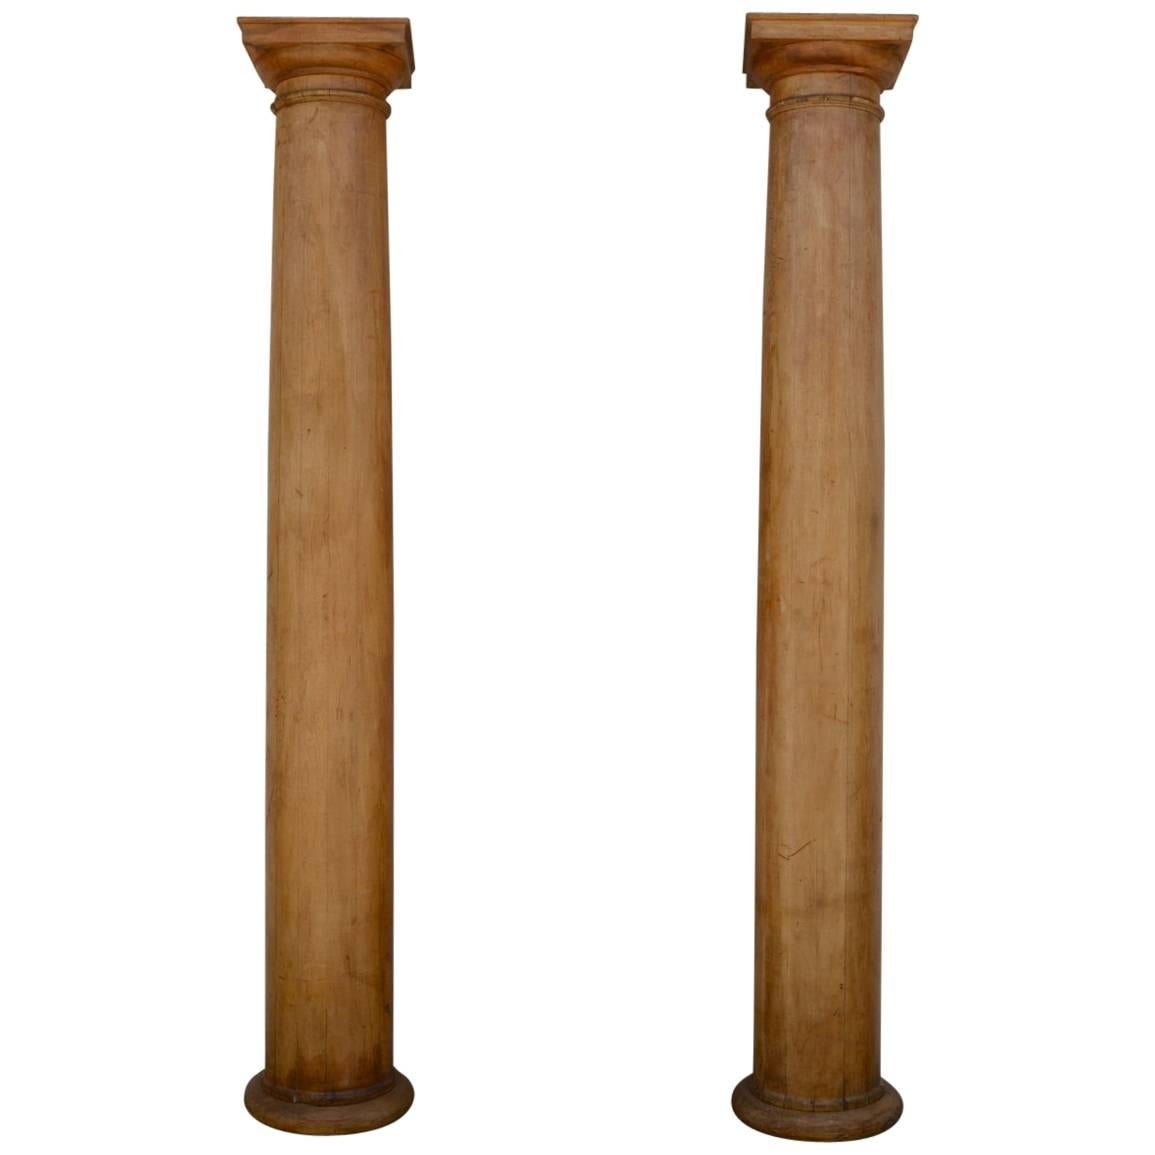 Pair of Elegant Tall Fluted Decorative Pine Columns